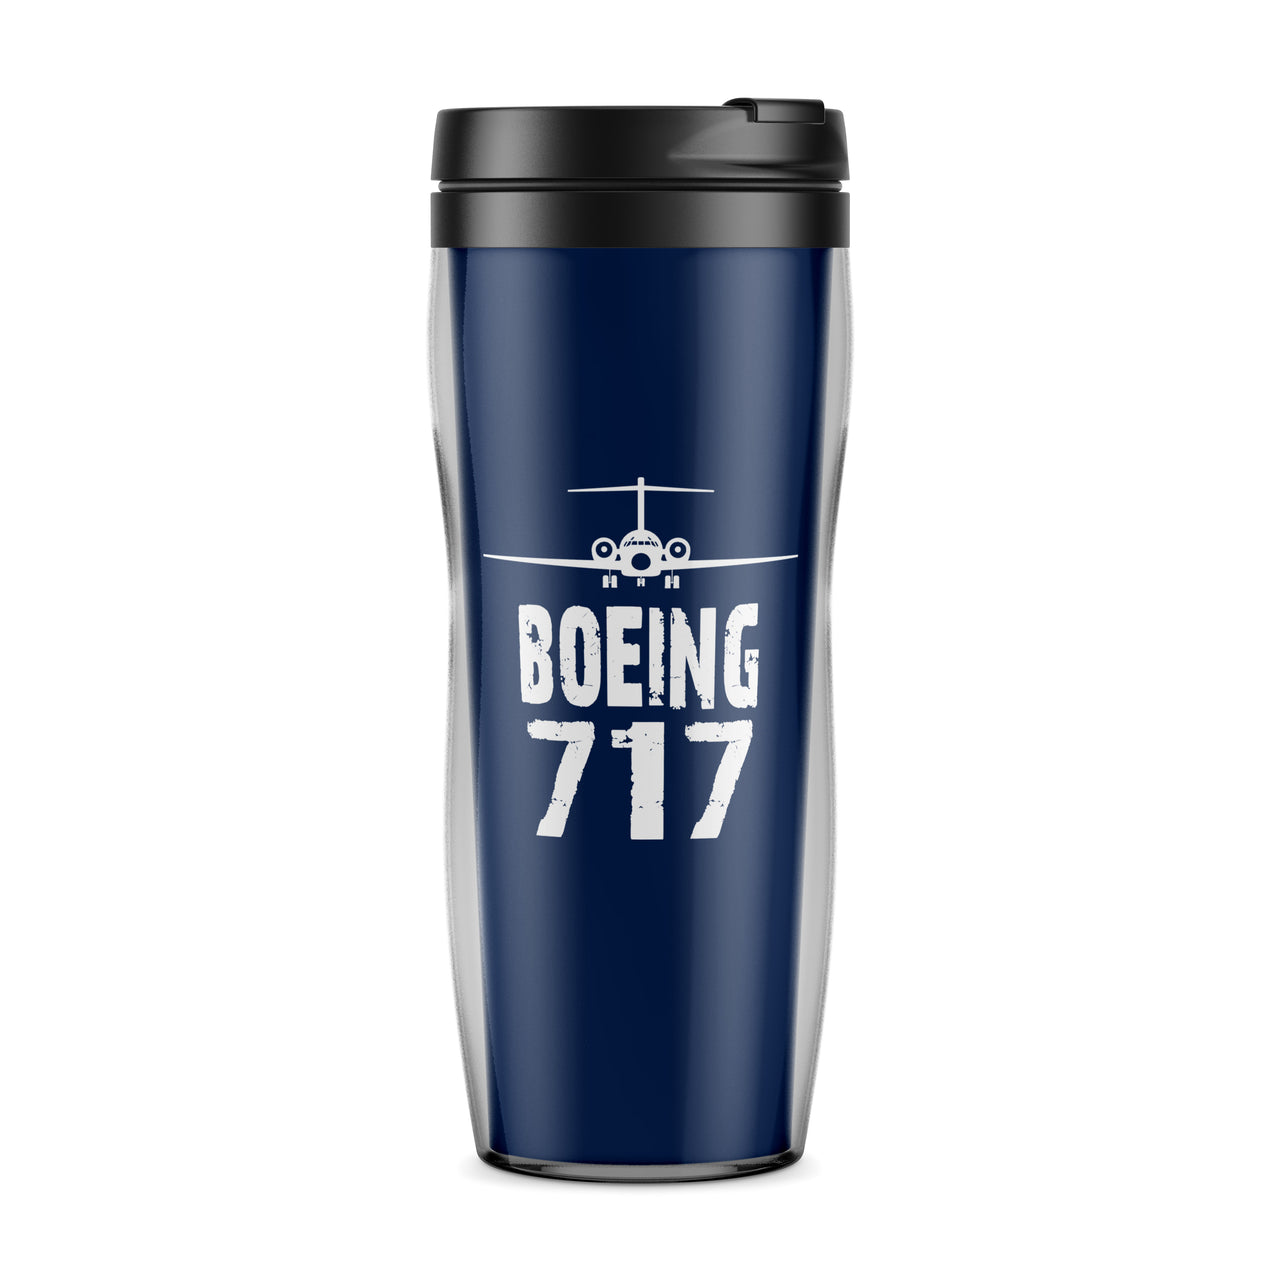 Boeing 717 & Plane Designed Travel Mugs